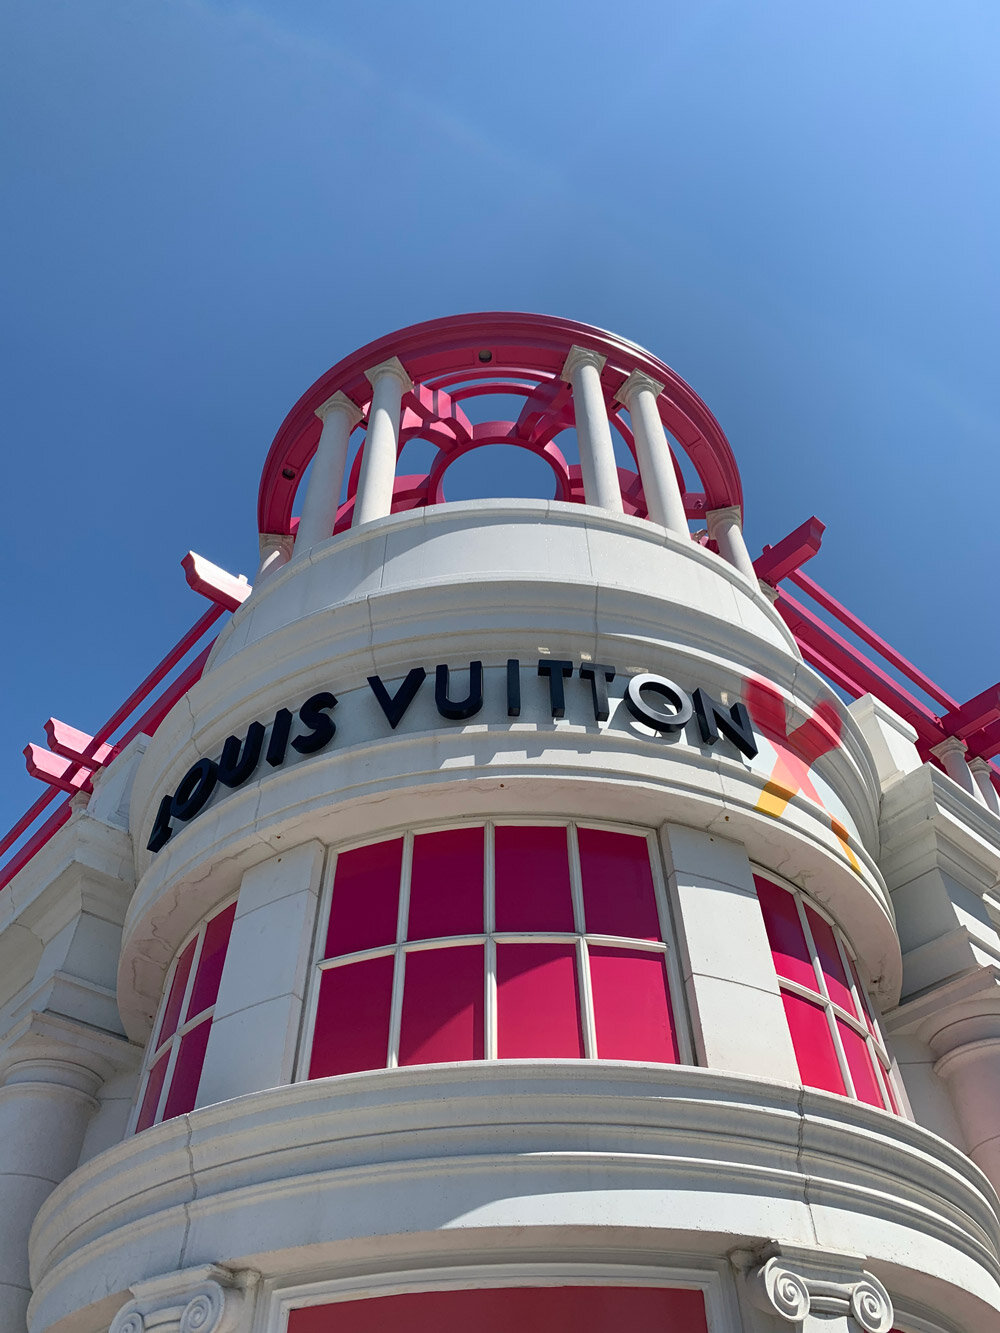 Louis Vuitton X Exhibition Celebrates 160 Years Of Artistic